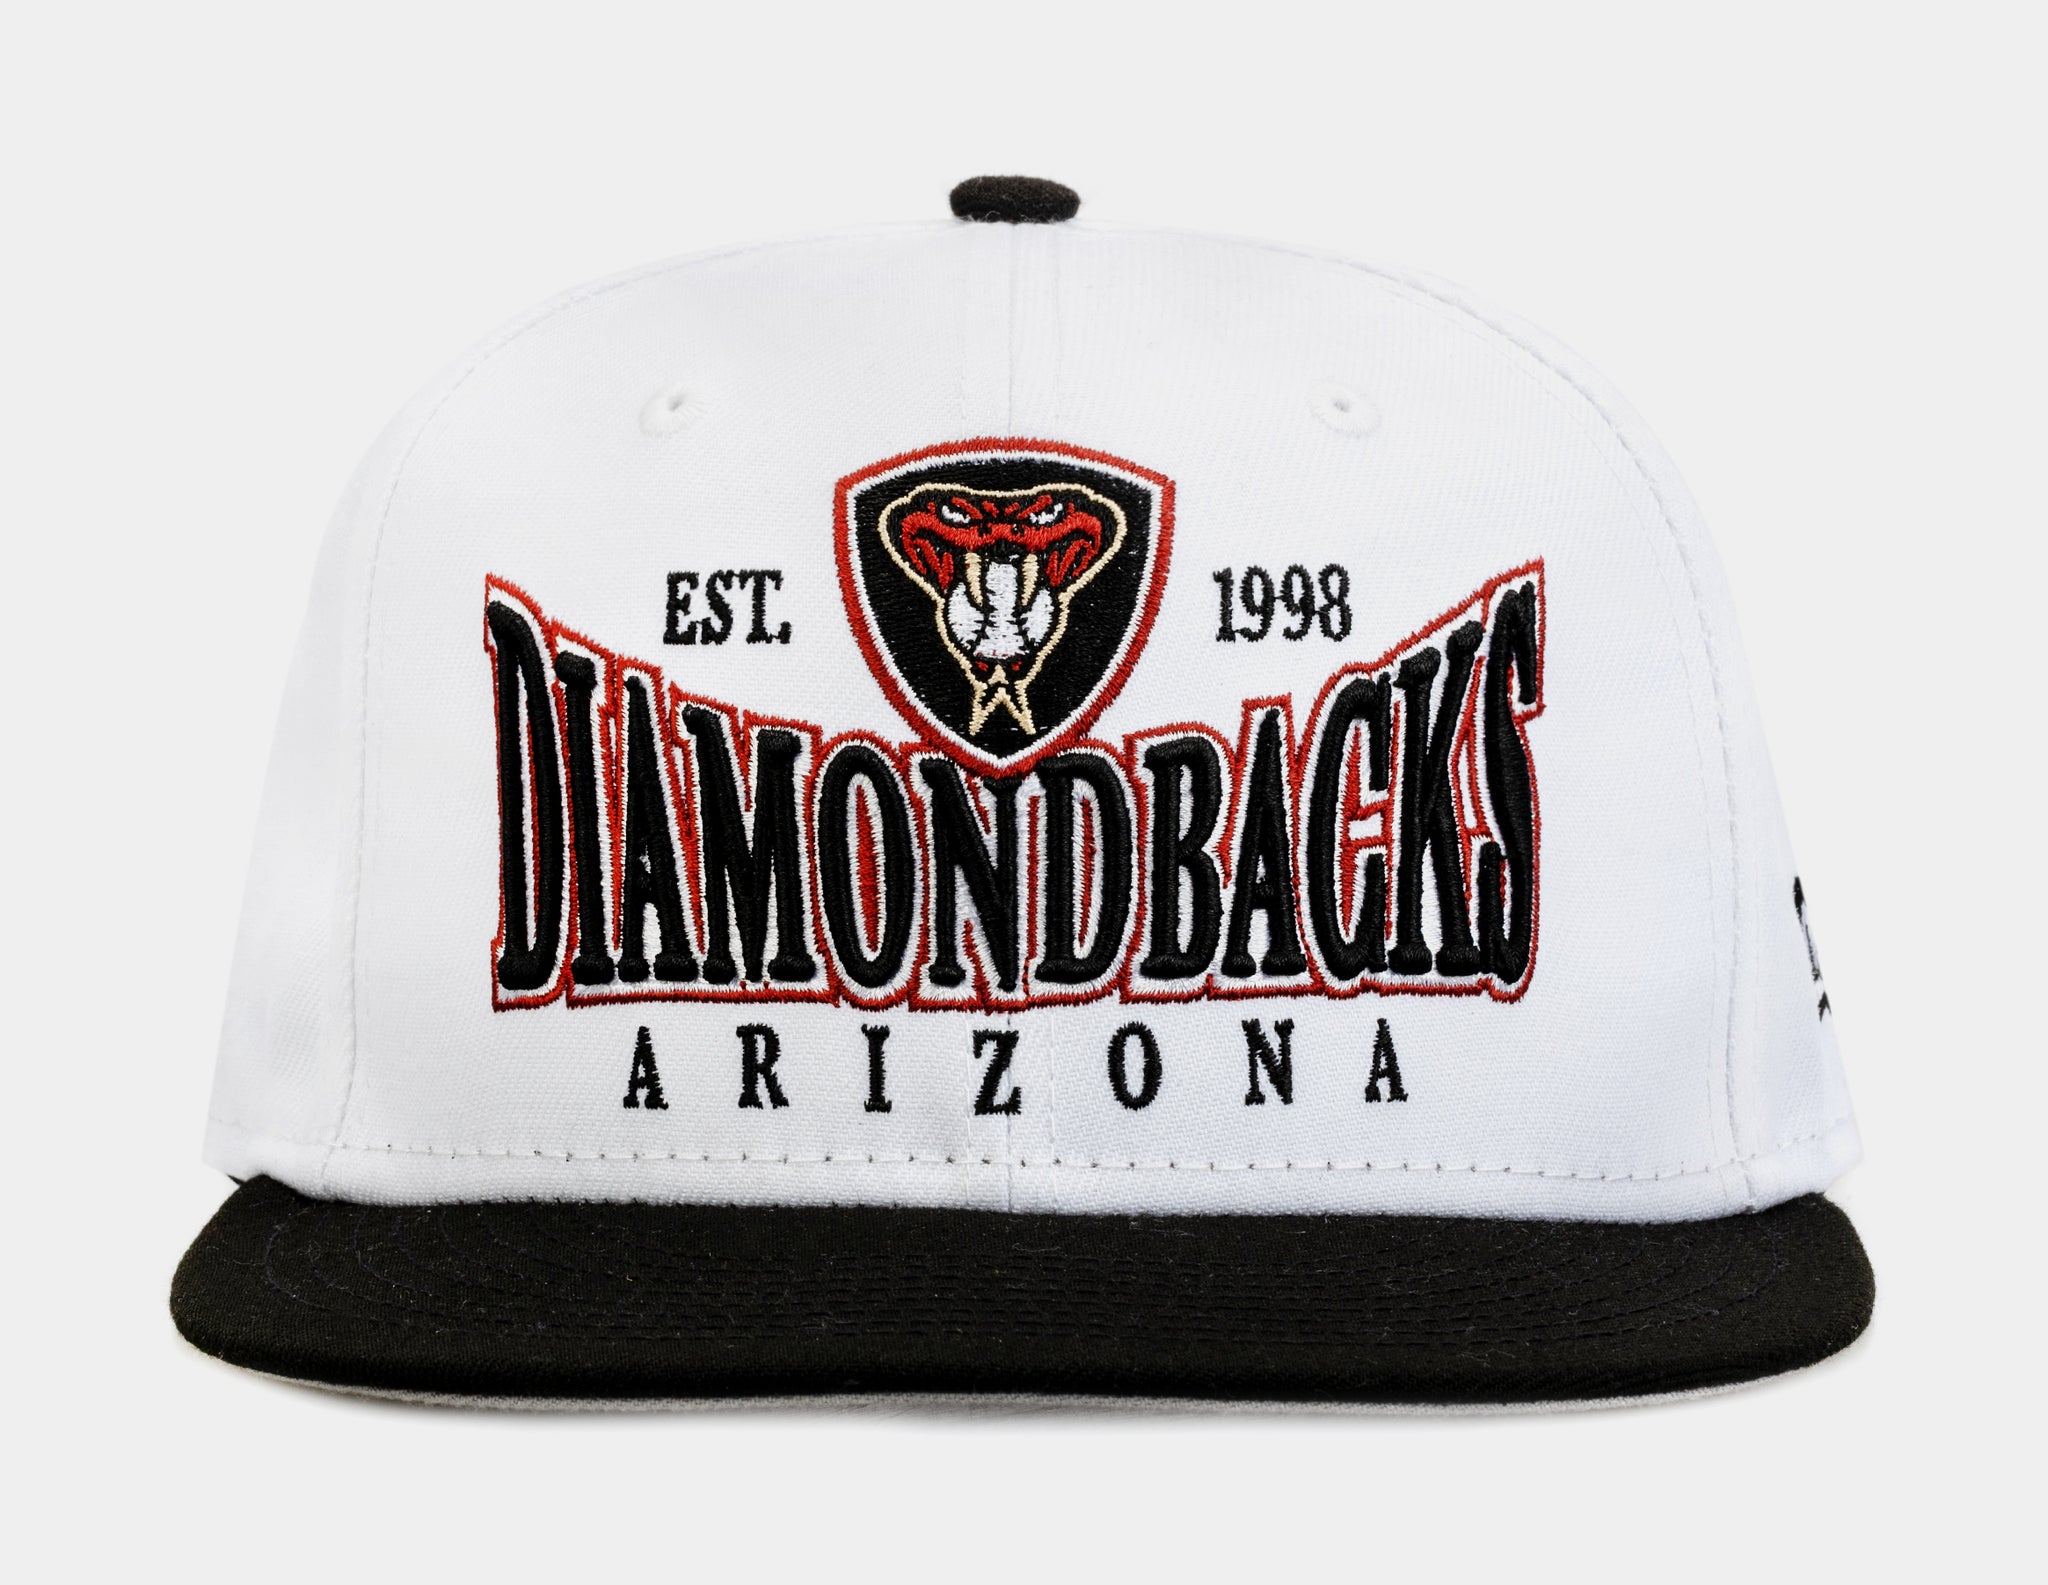 Black 9FIFTY New Era Snapback Hat